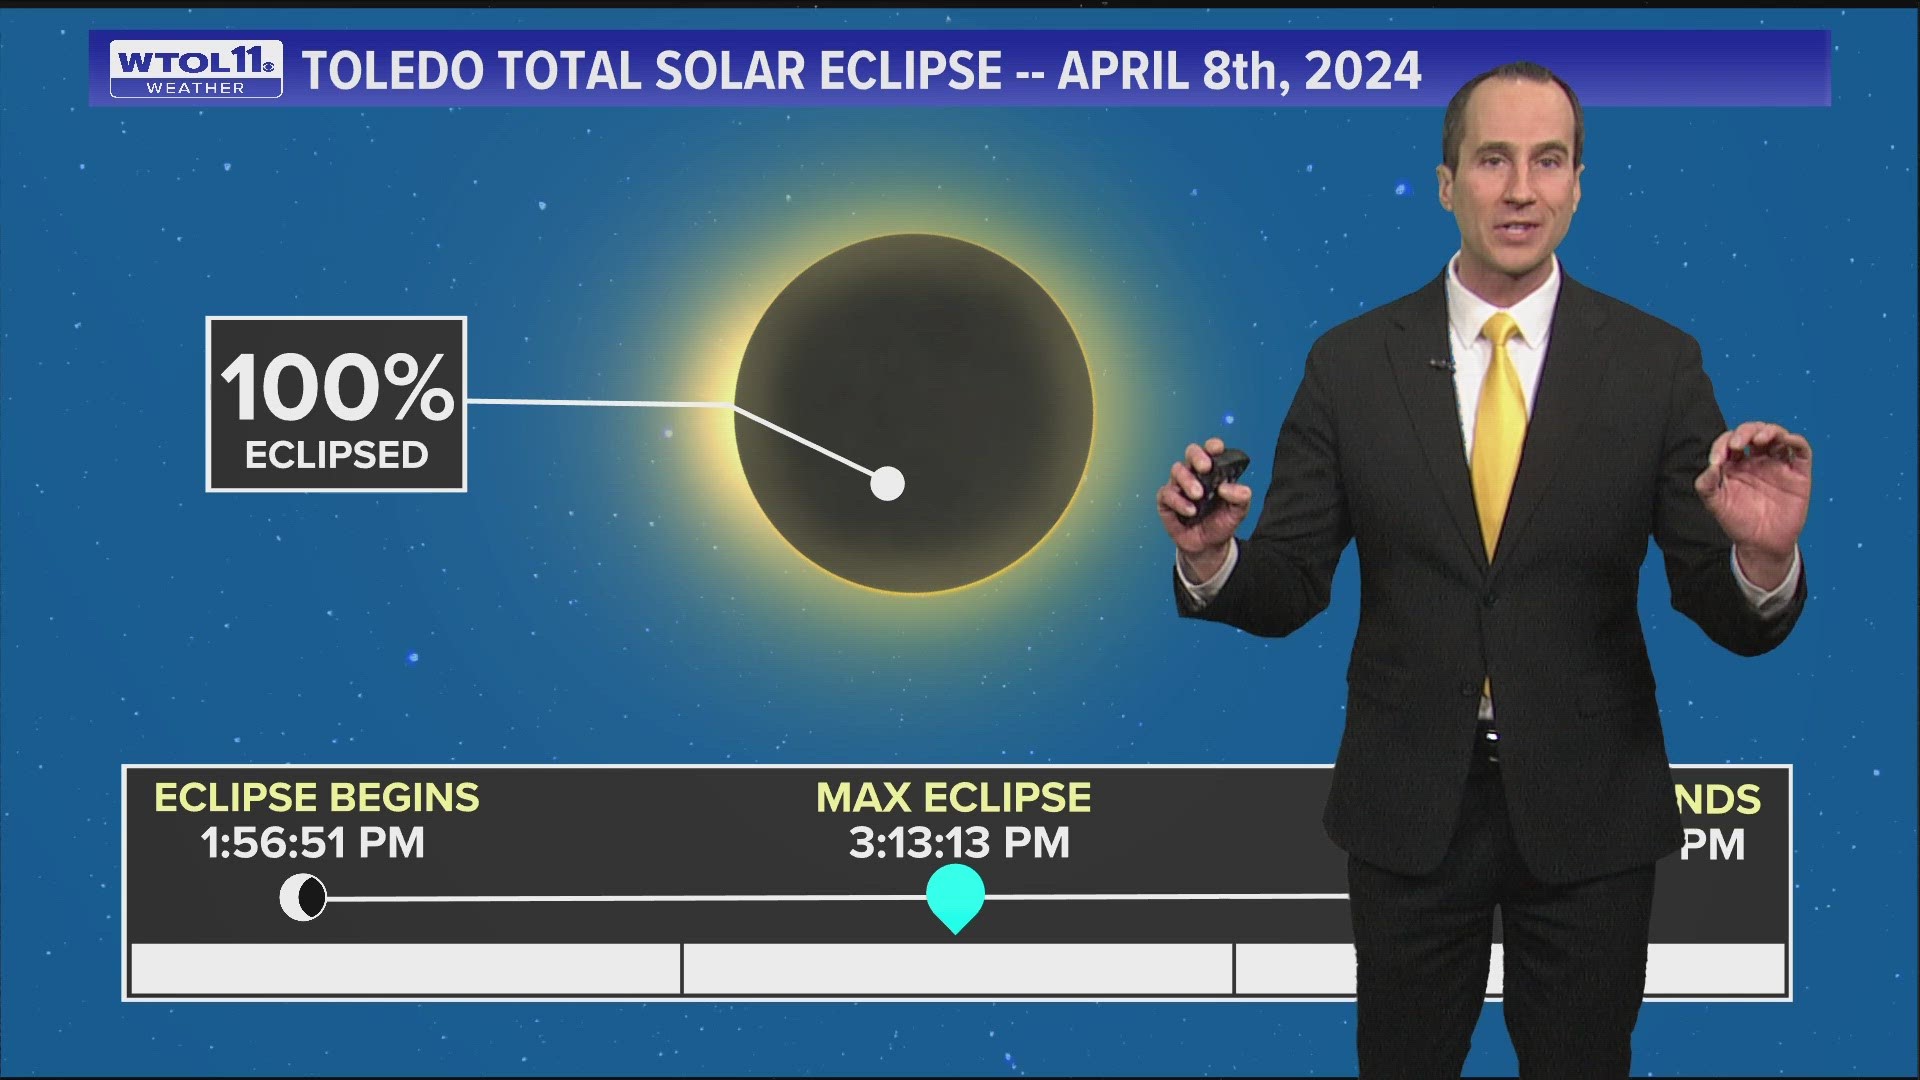 Timeline of the total solar eclipse on April 8, 2024